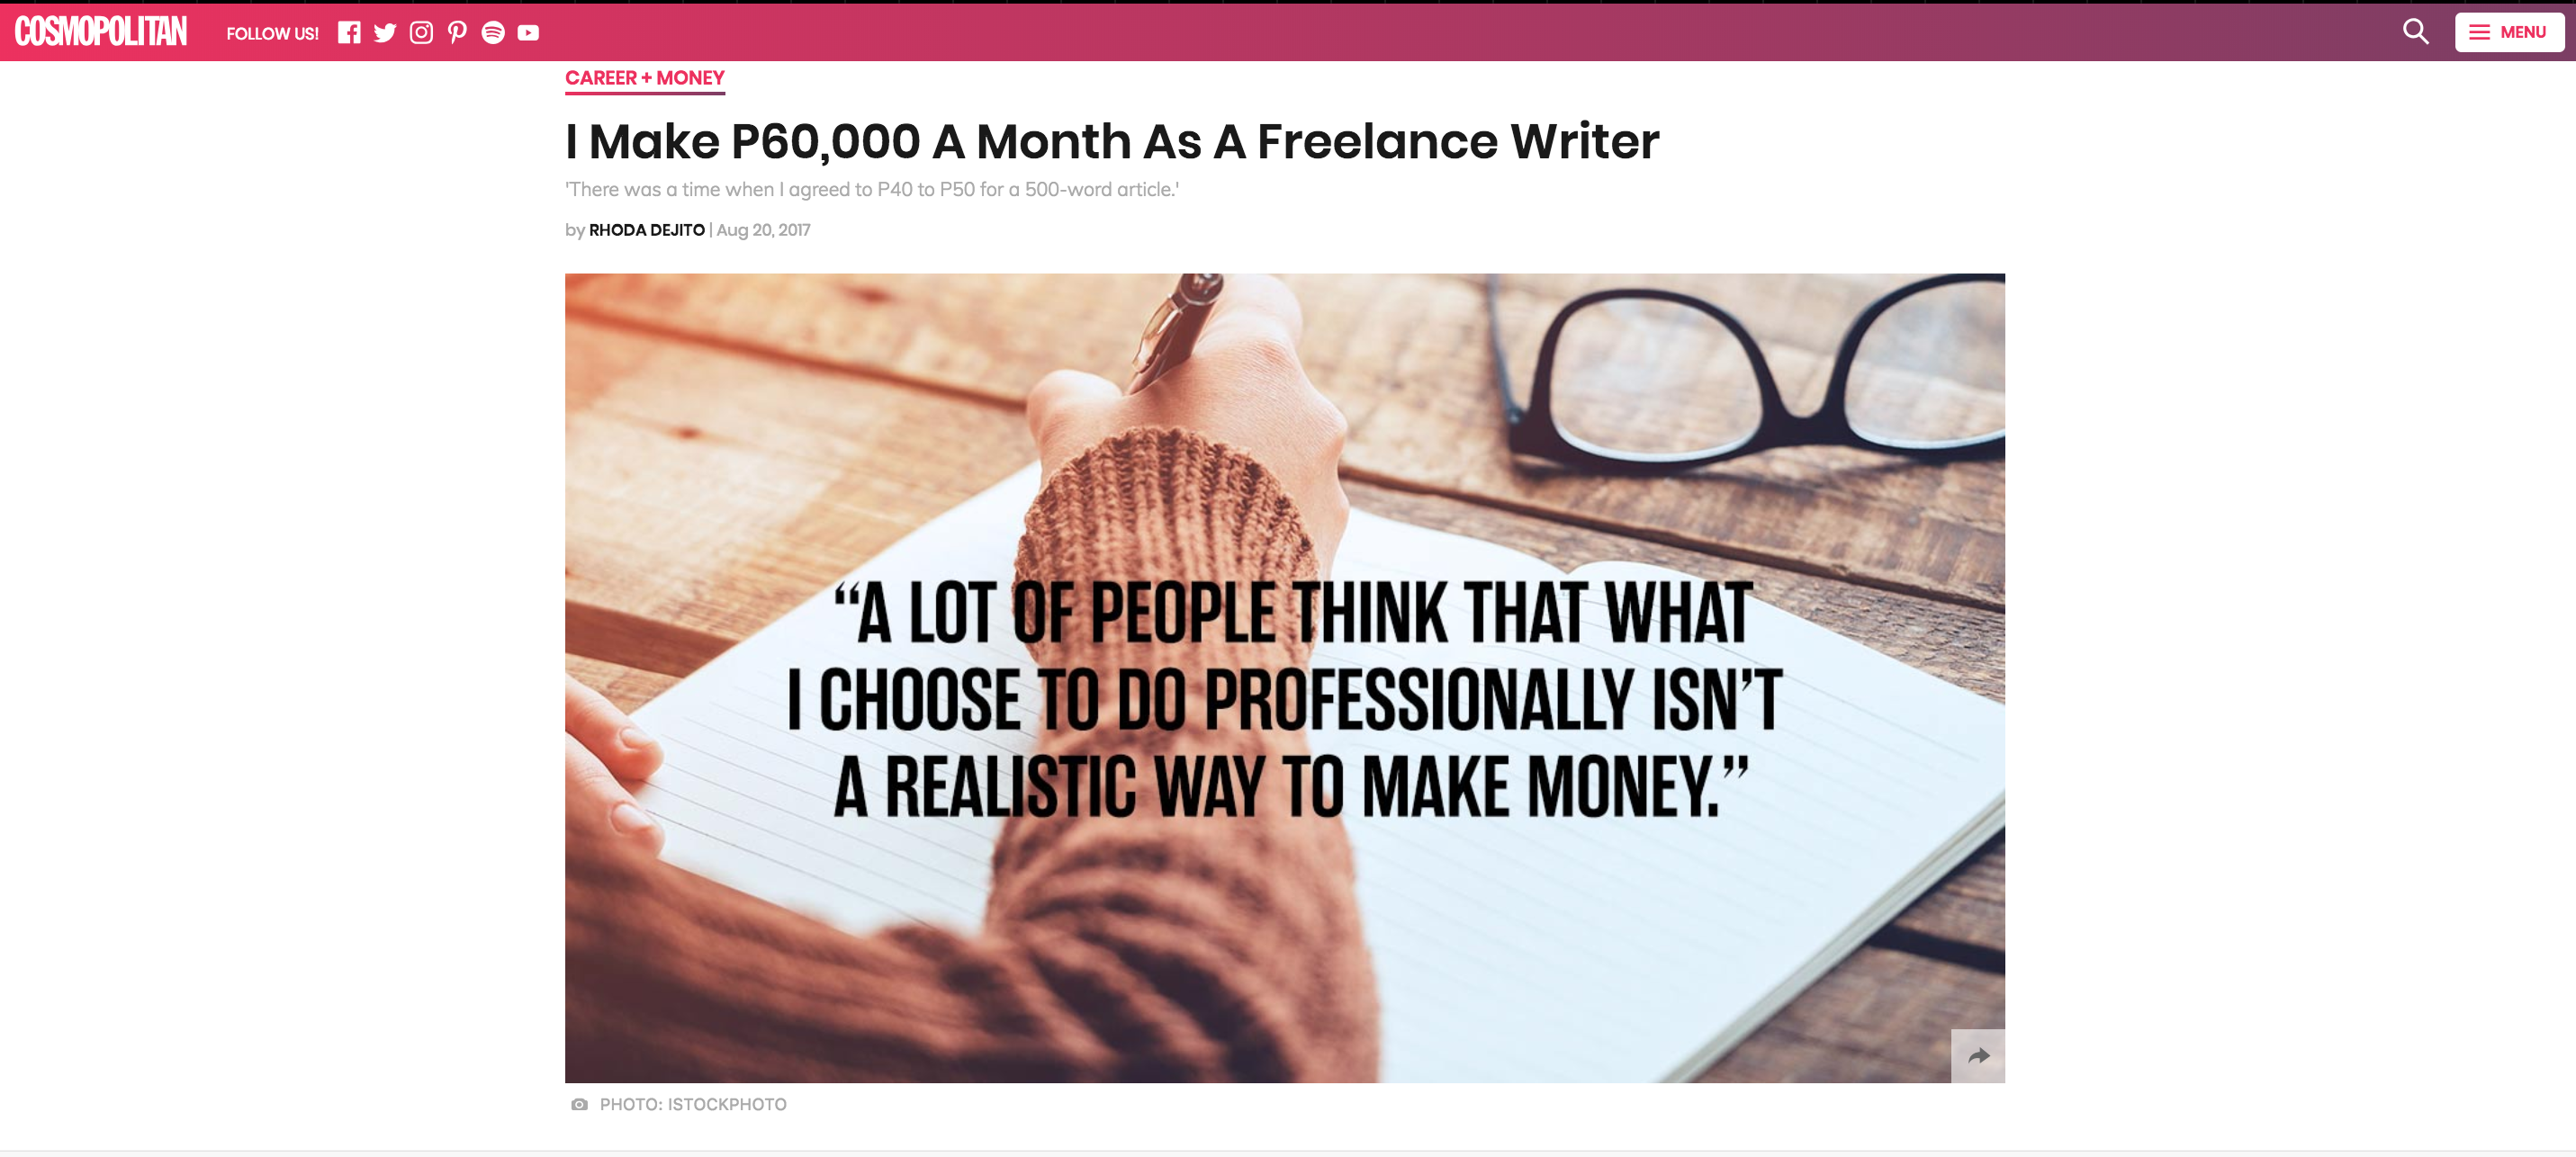 I Make P60,000 A Month As A Freelance Writer by Rhoda Dejito